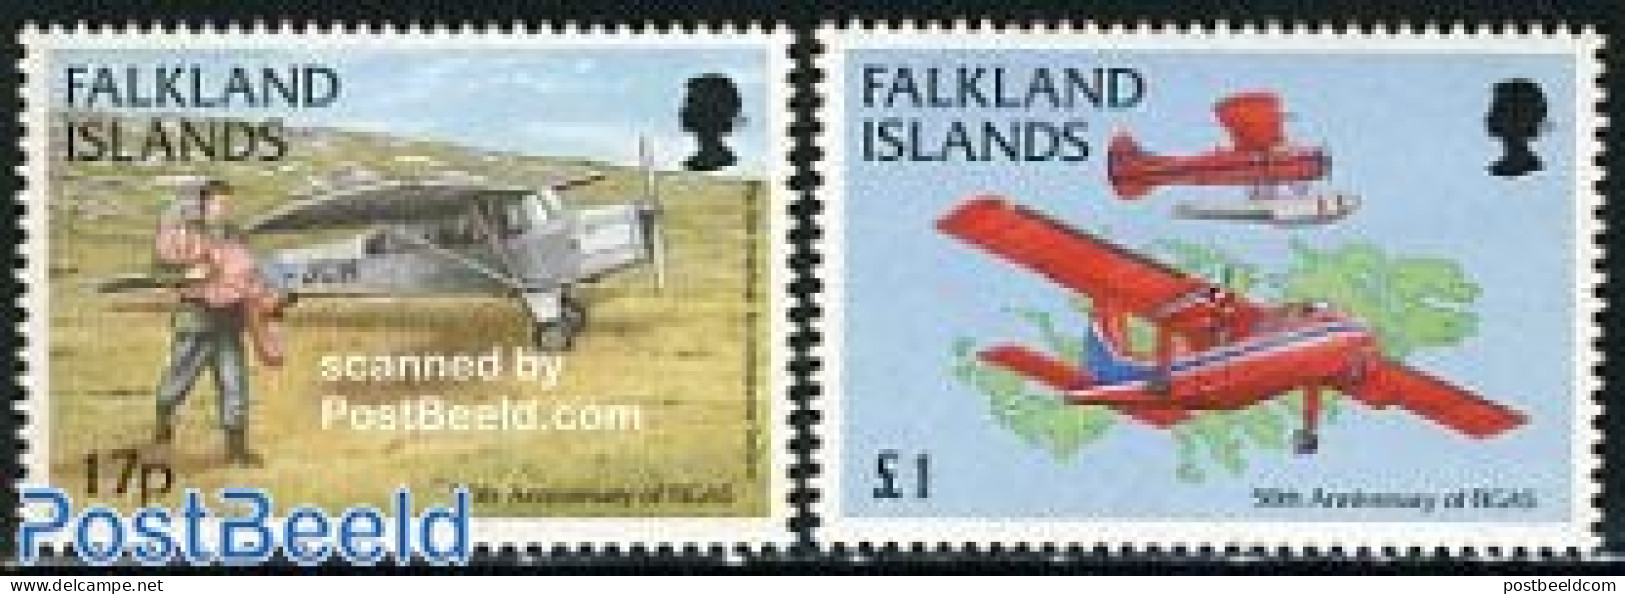 Falkland Islands 1998 FIGAS 2v, Mint NH, Transport - Aircraft & Aviation - Vliegtuigen